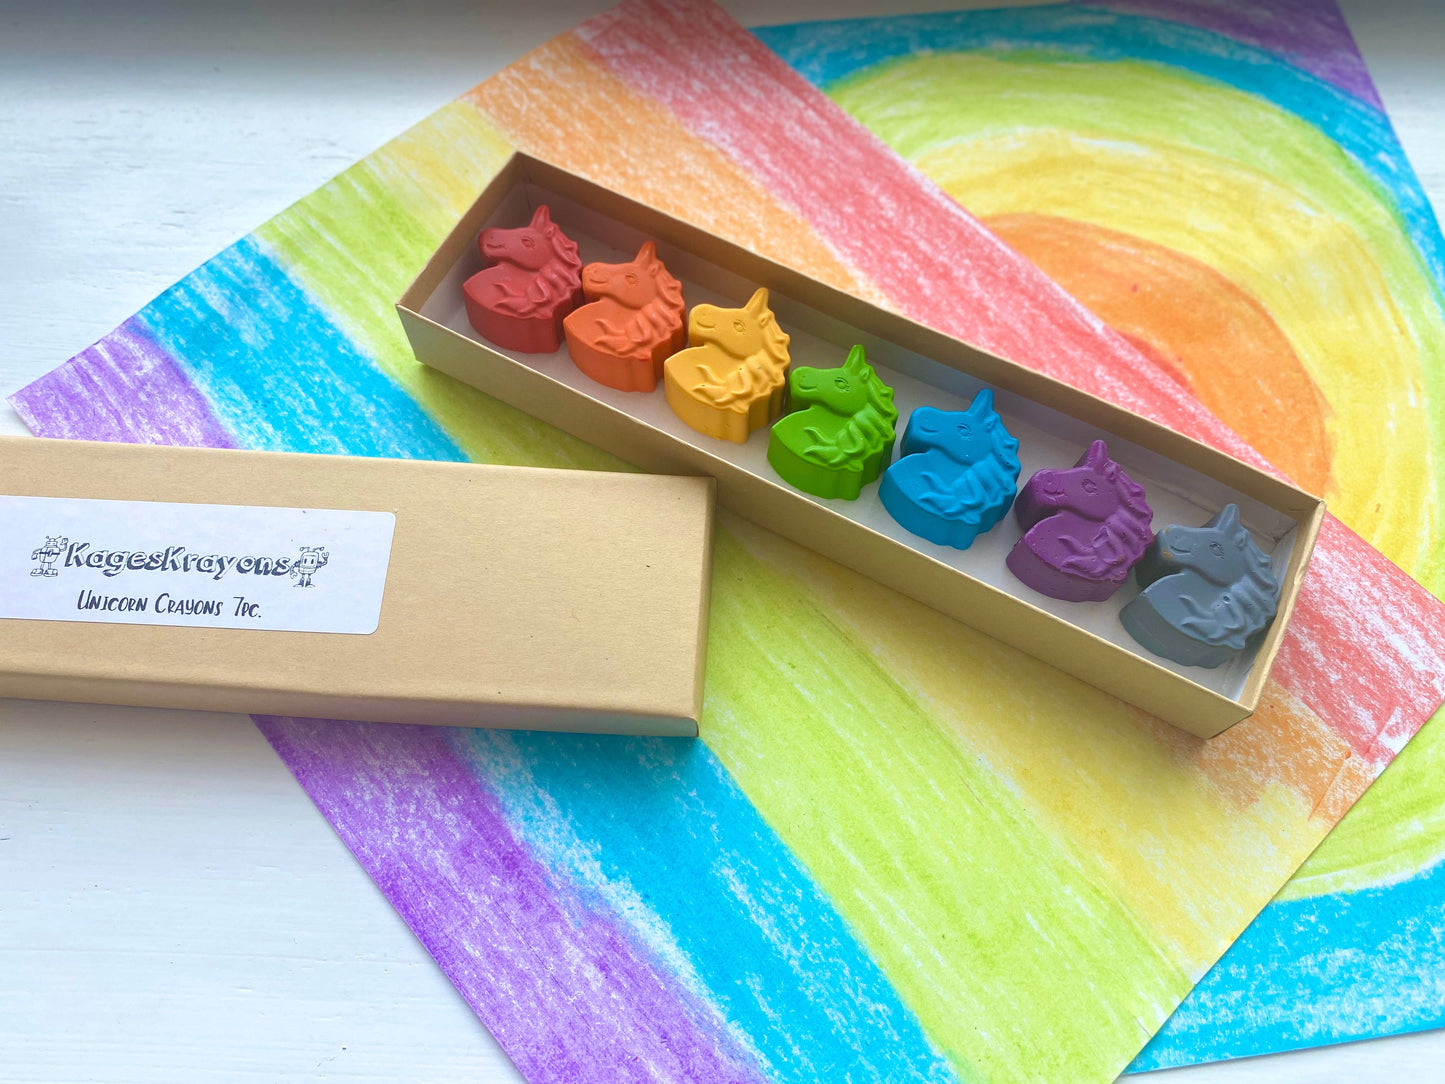 Unicorn Crayons Gift Box KagesKrayons